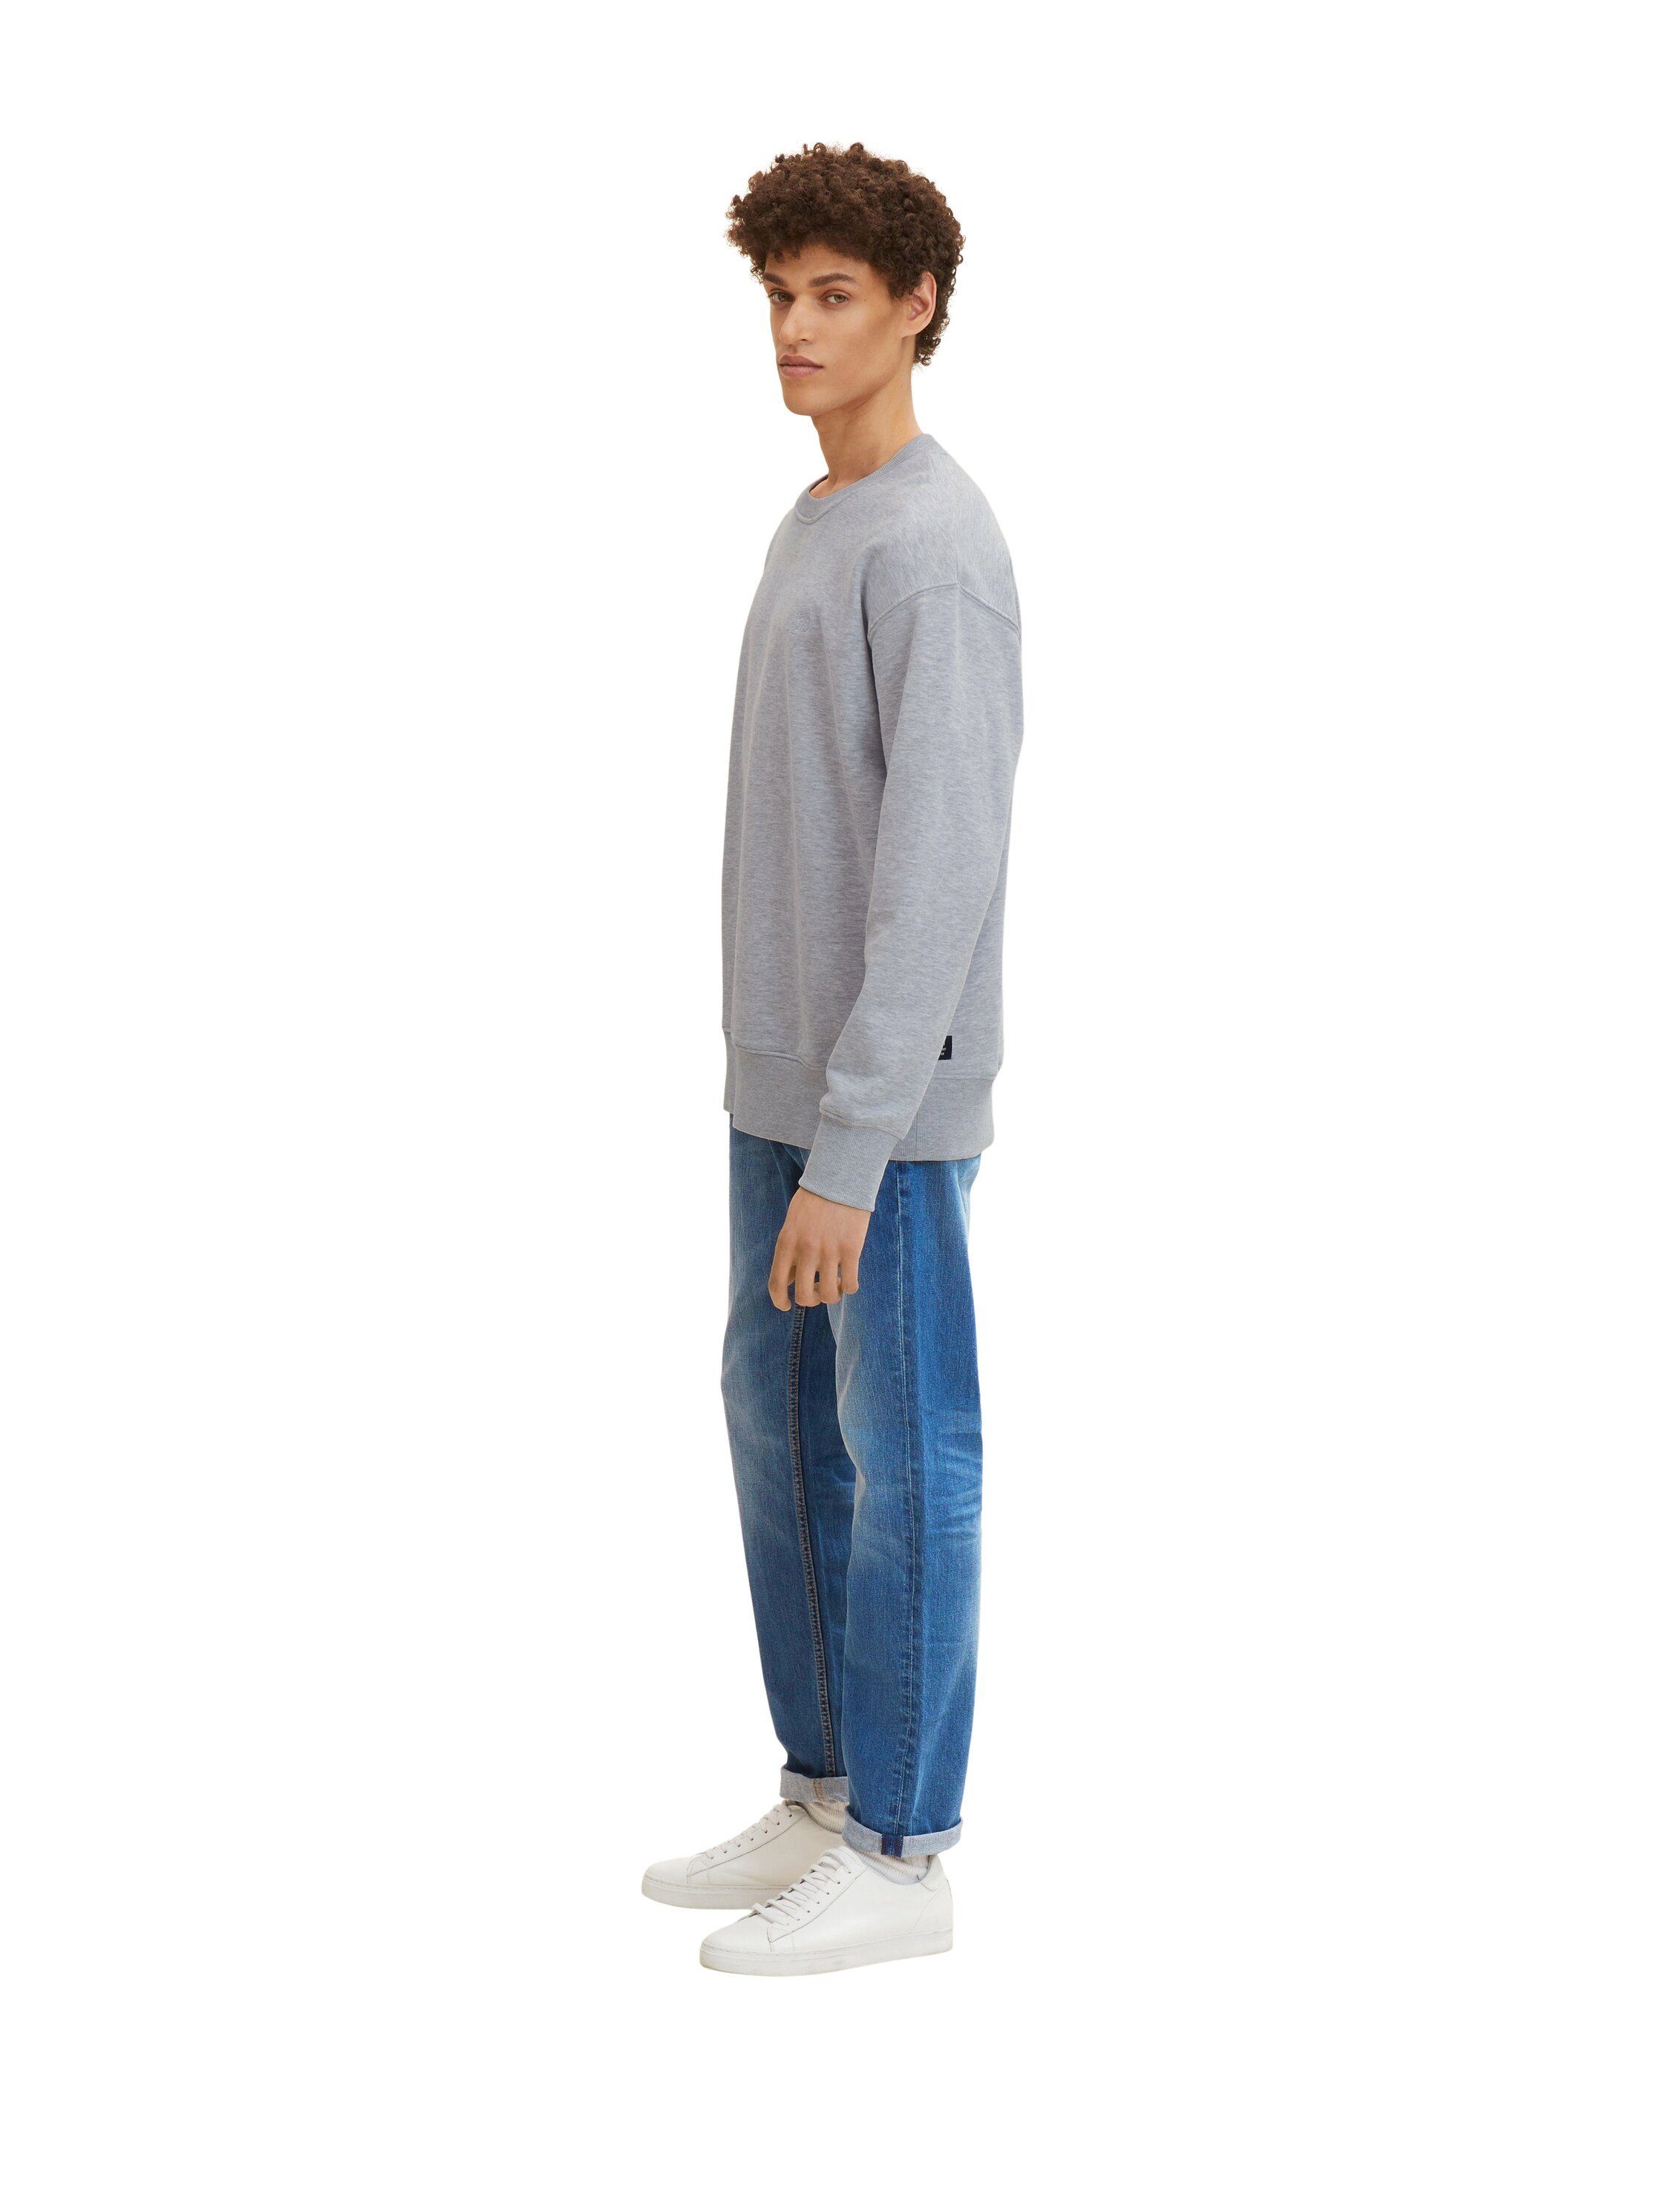 mid TOM Jeans Slim-fit-Jeans used blue stone Slim-Fit denim TAILOR